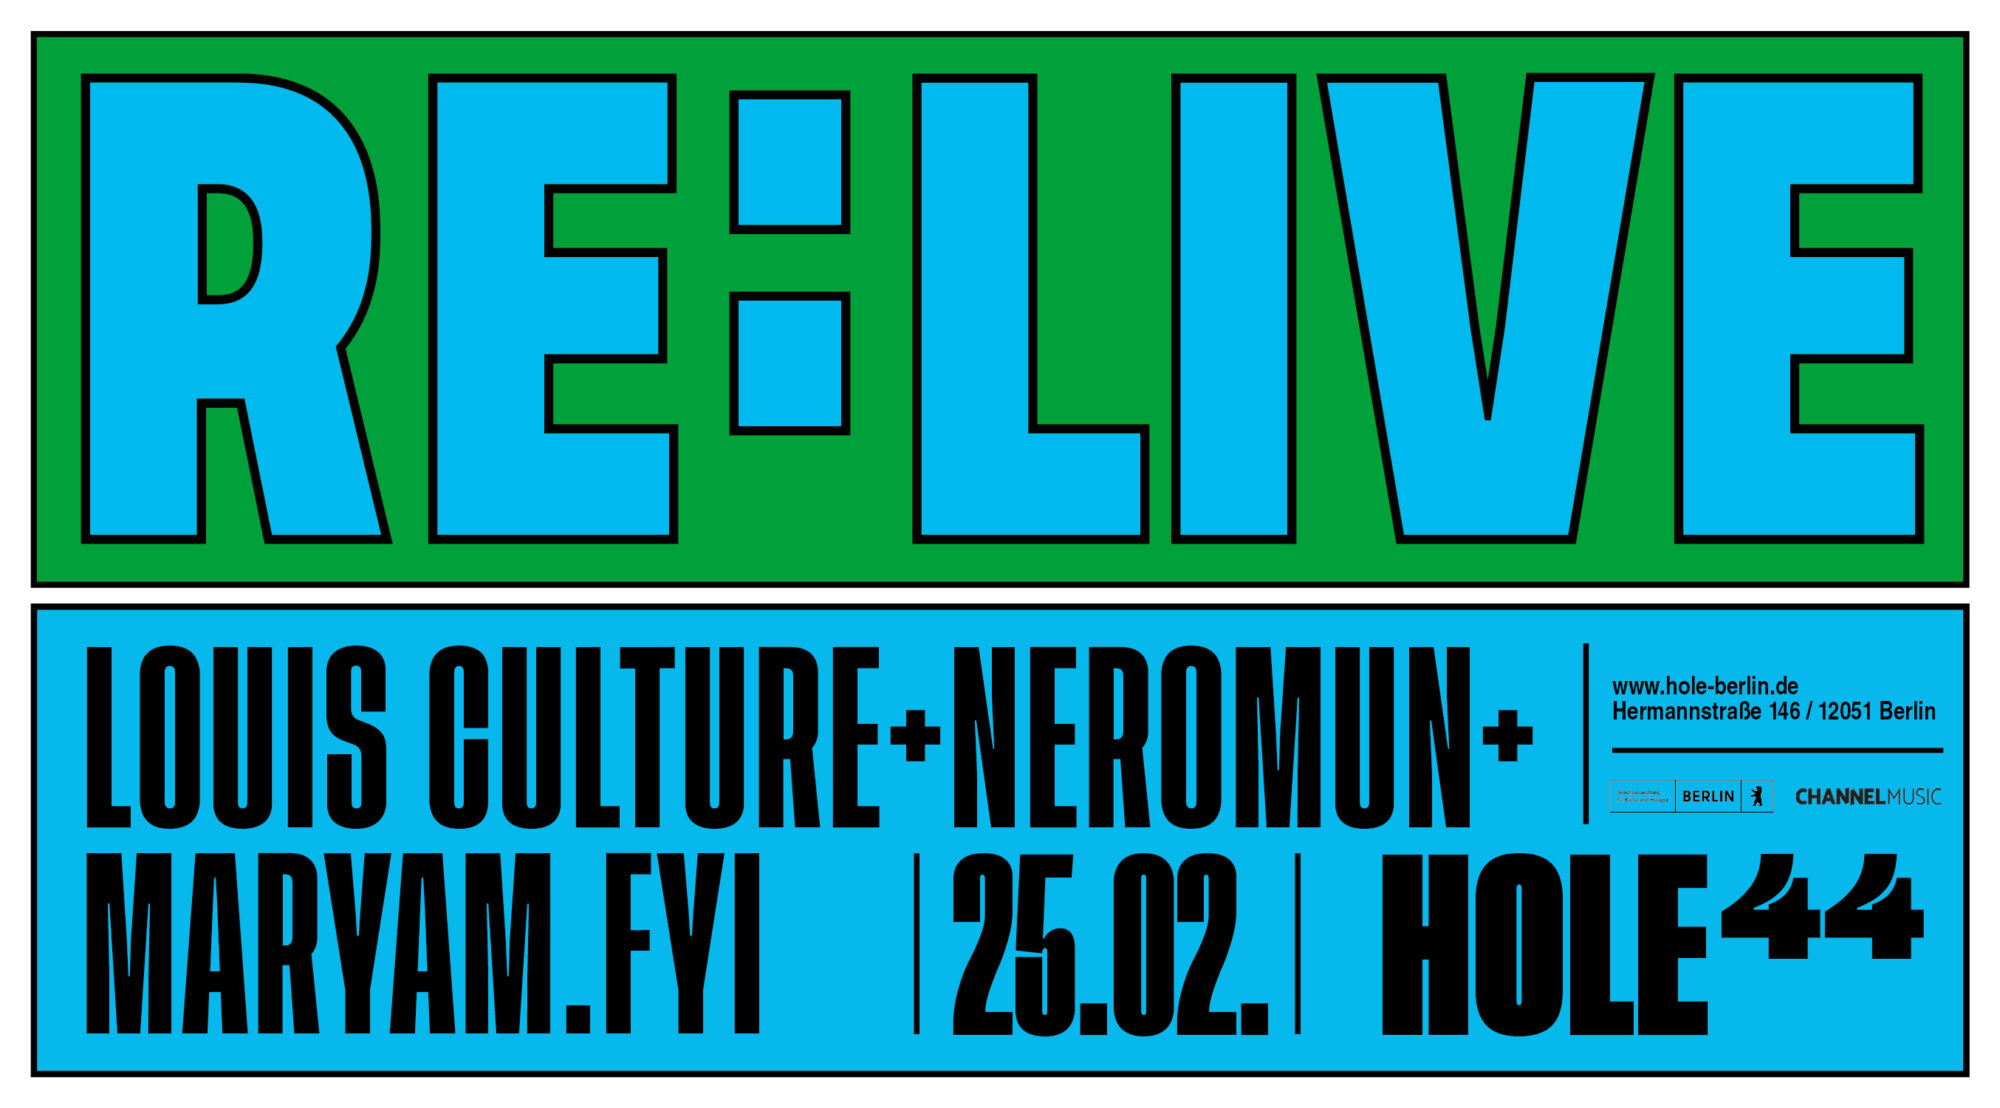 RE:LIVE - Neromun + Louis Culture + Maryam.fyi